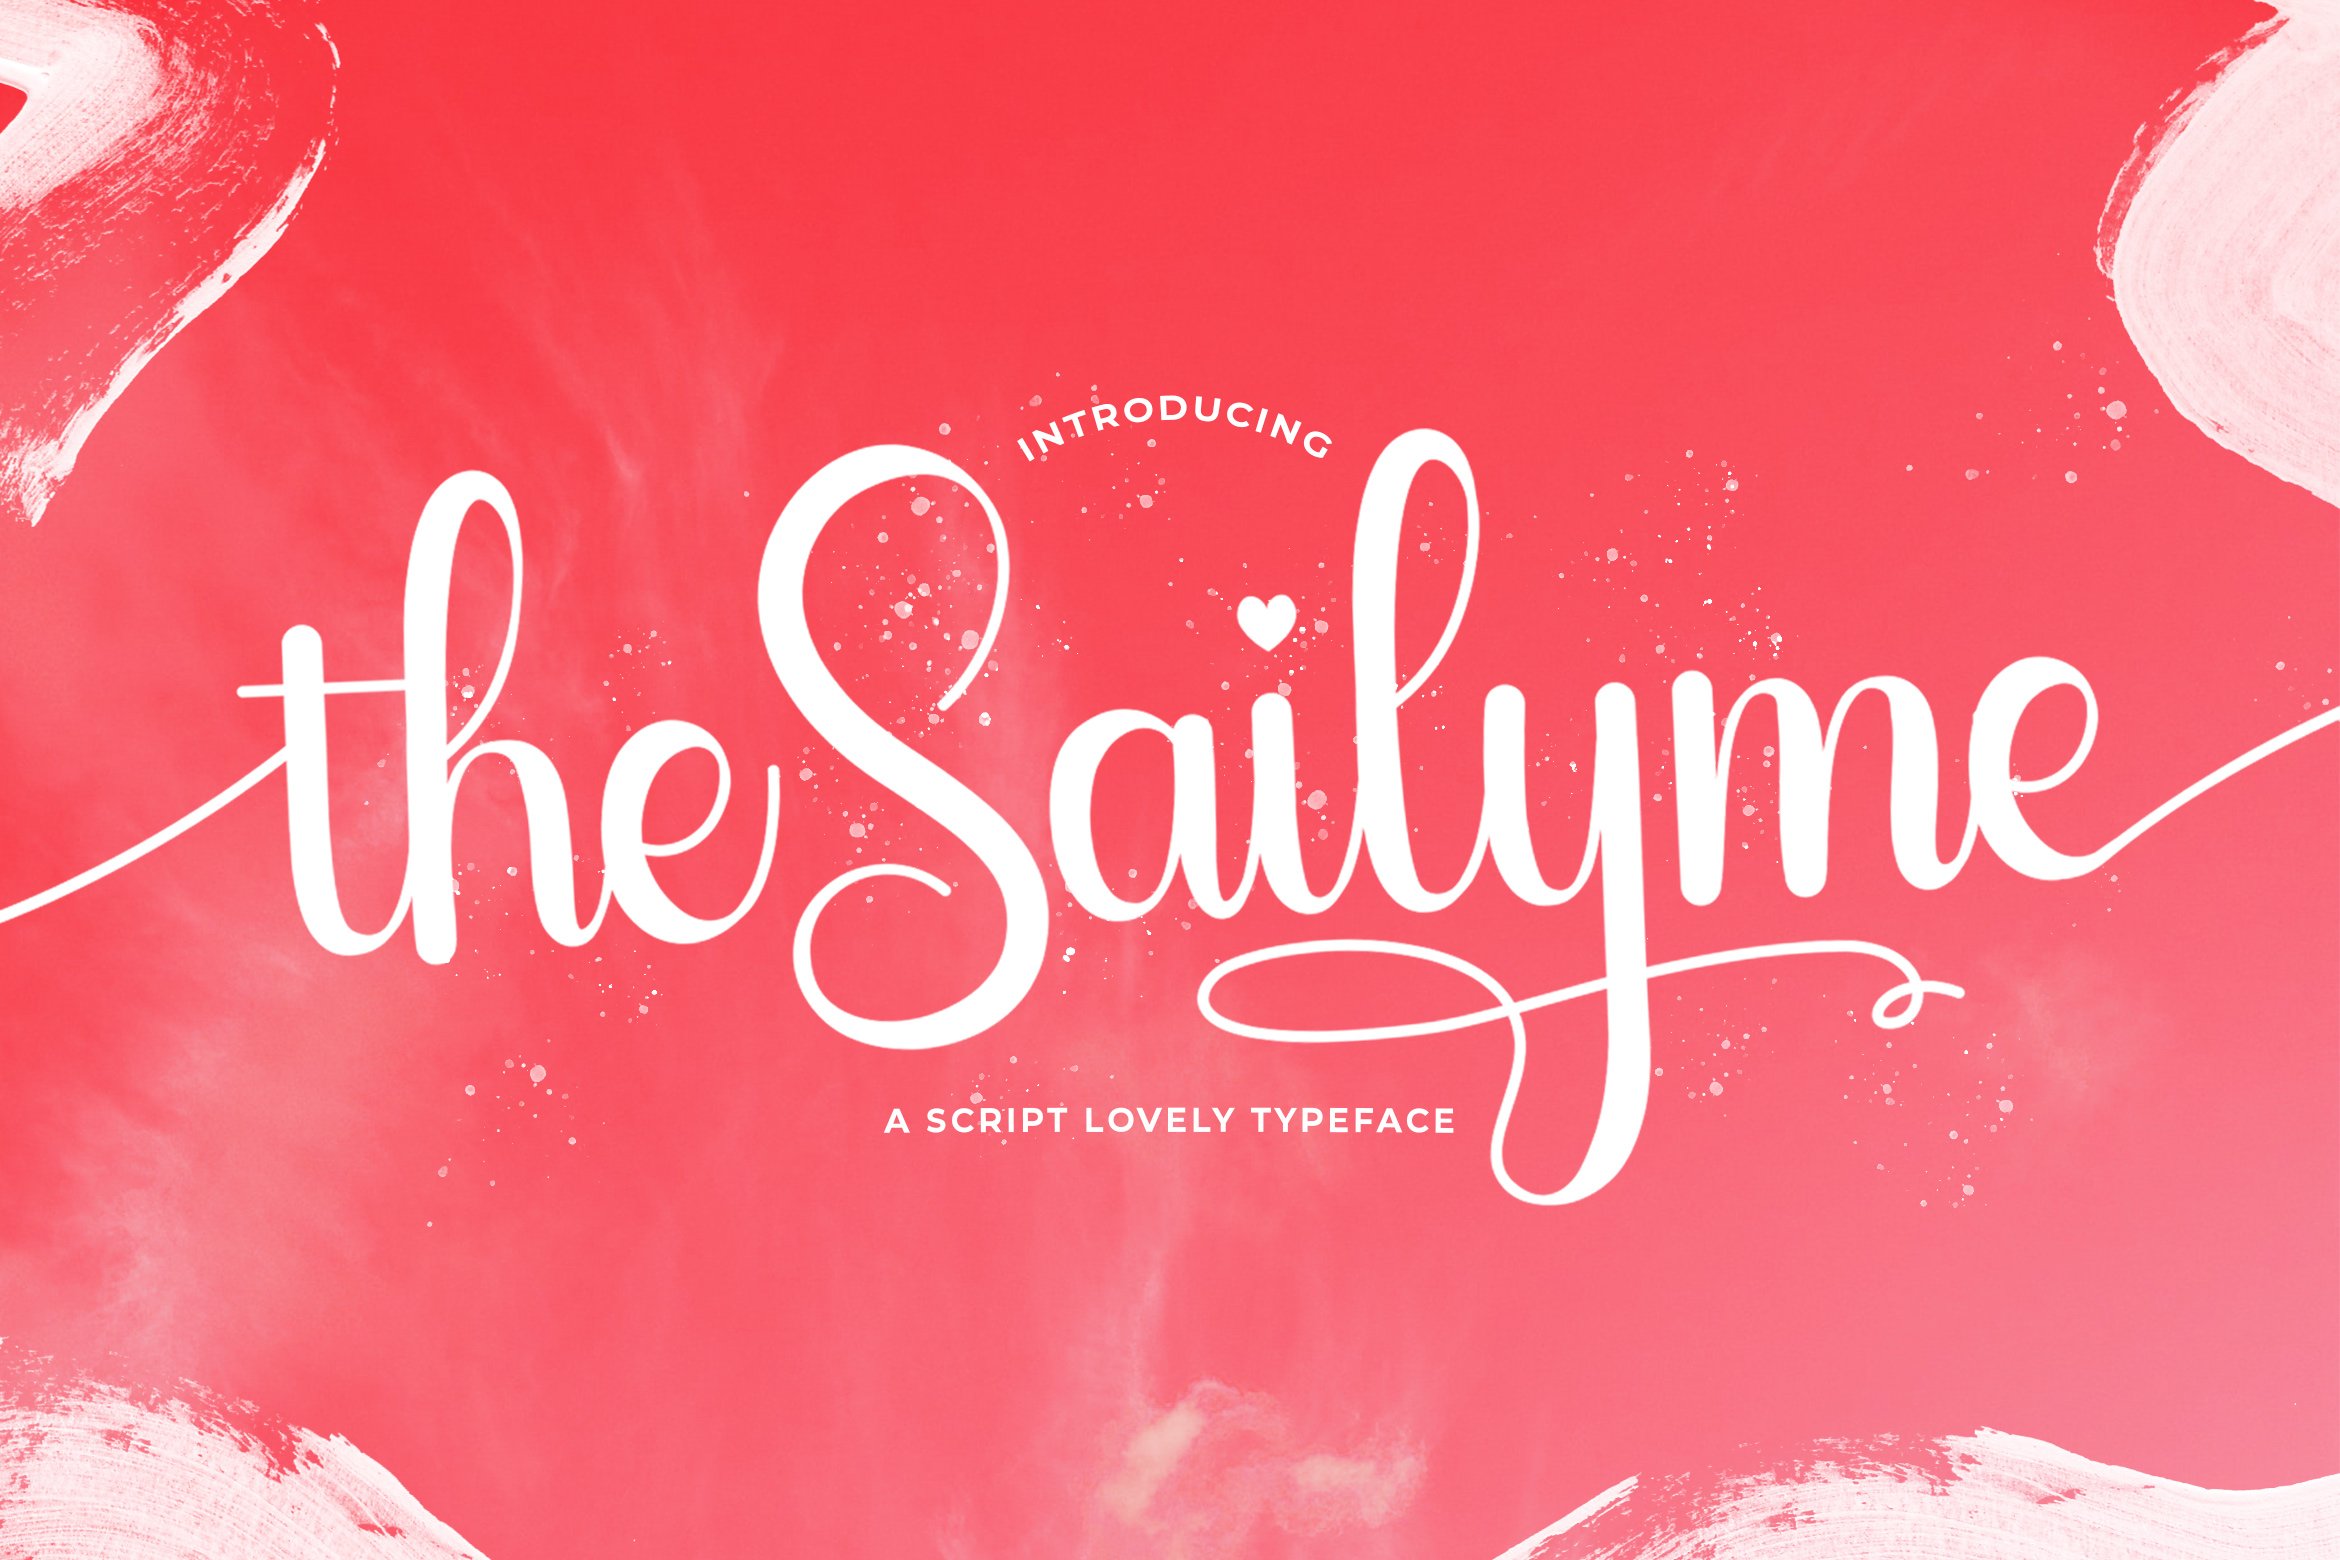 Sailyme - Lovely Script Font cover image.